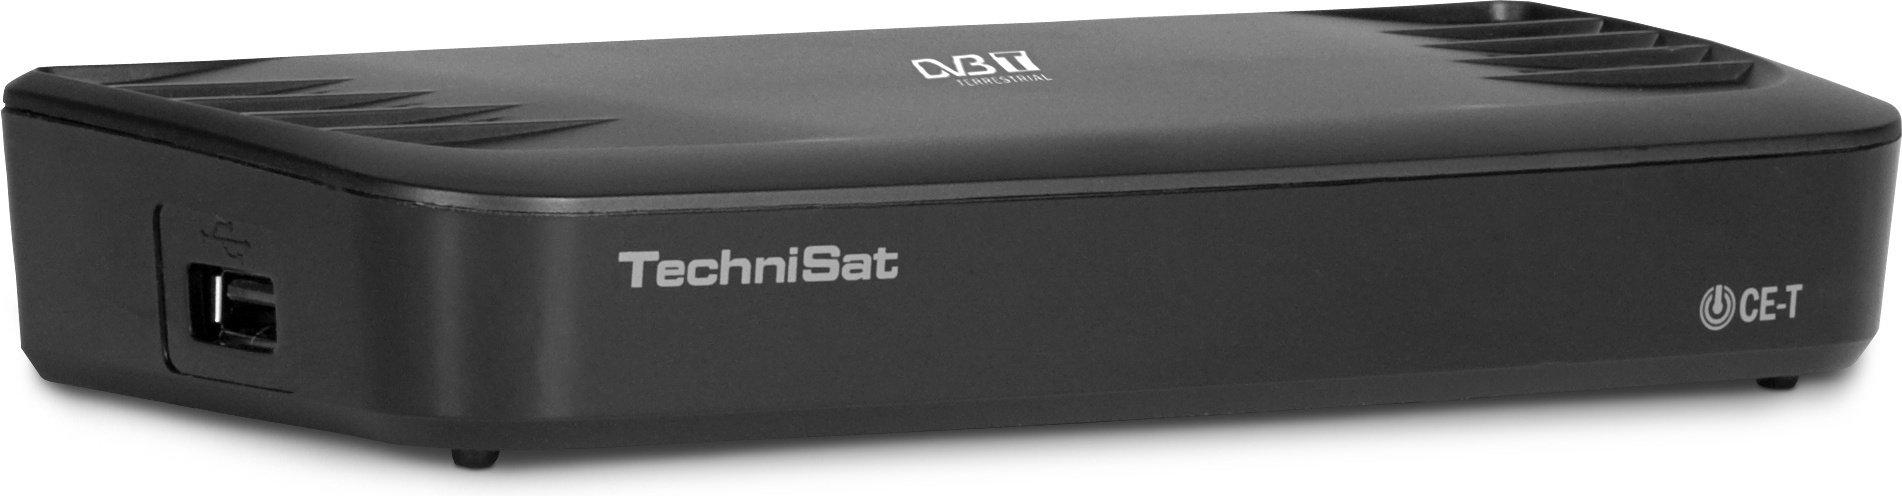 USB DVB-T, MPEG-2, MPEG-4 1920x1080 Kruger&Matz KM0201 to łatwy w instalacji tuner